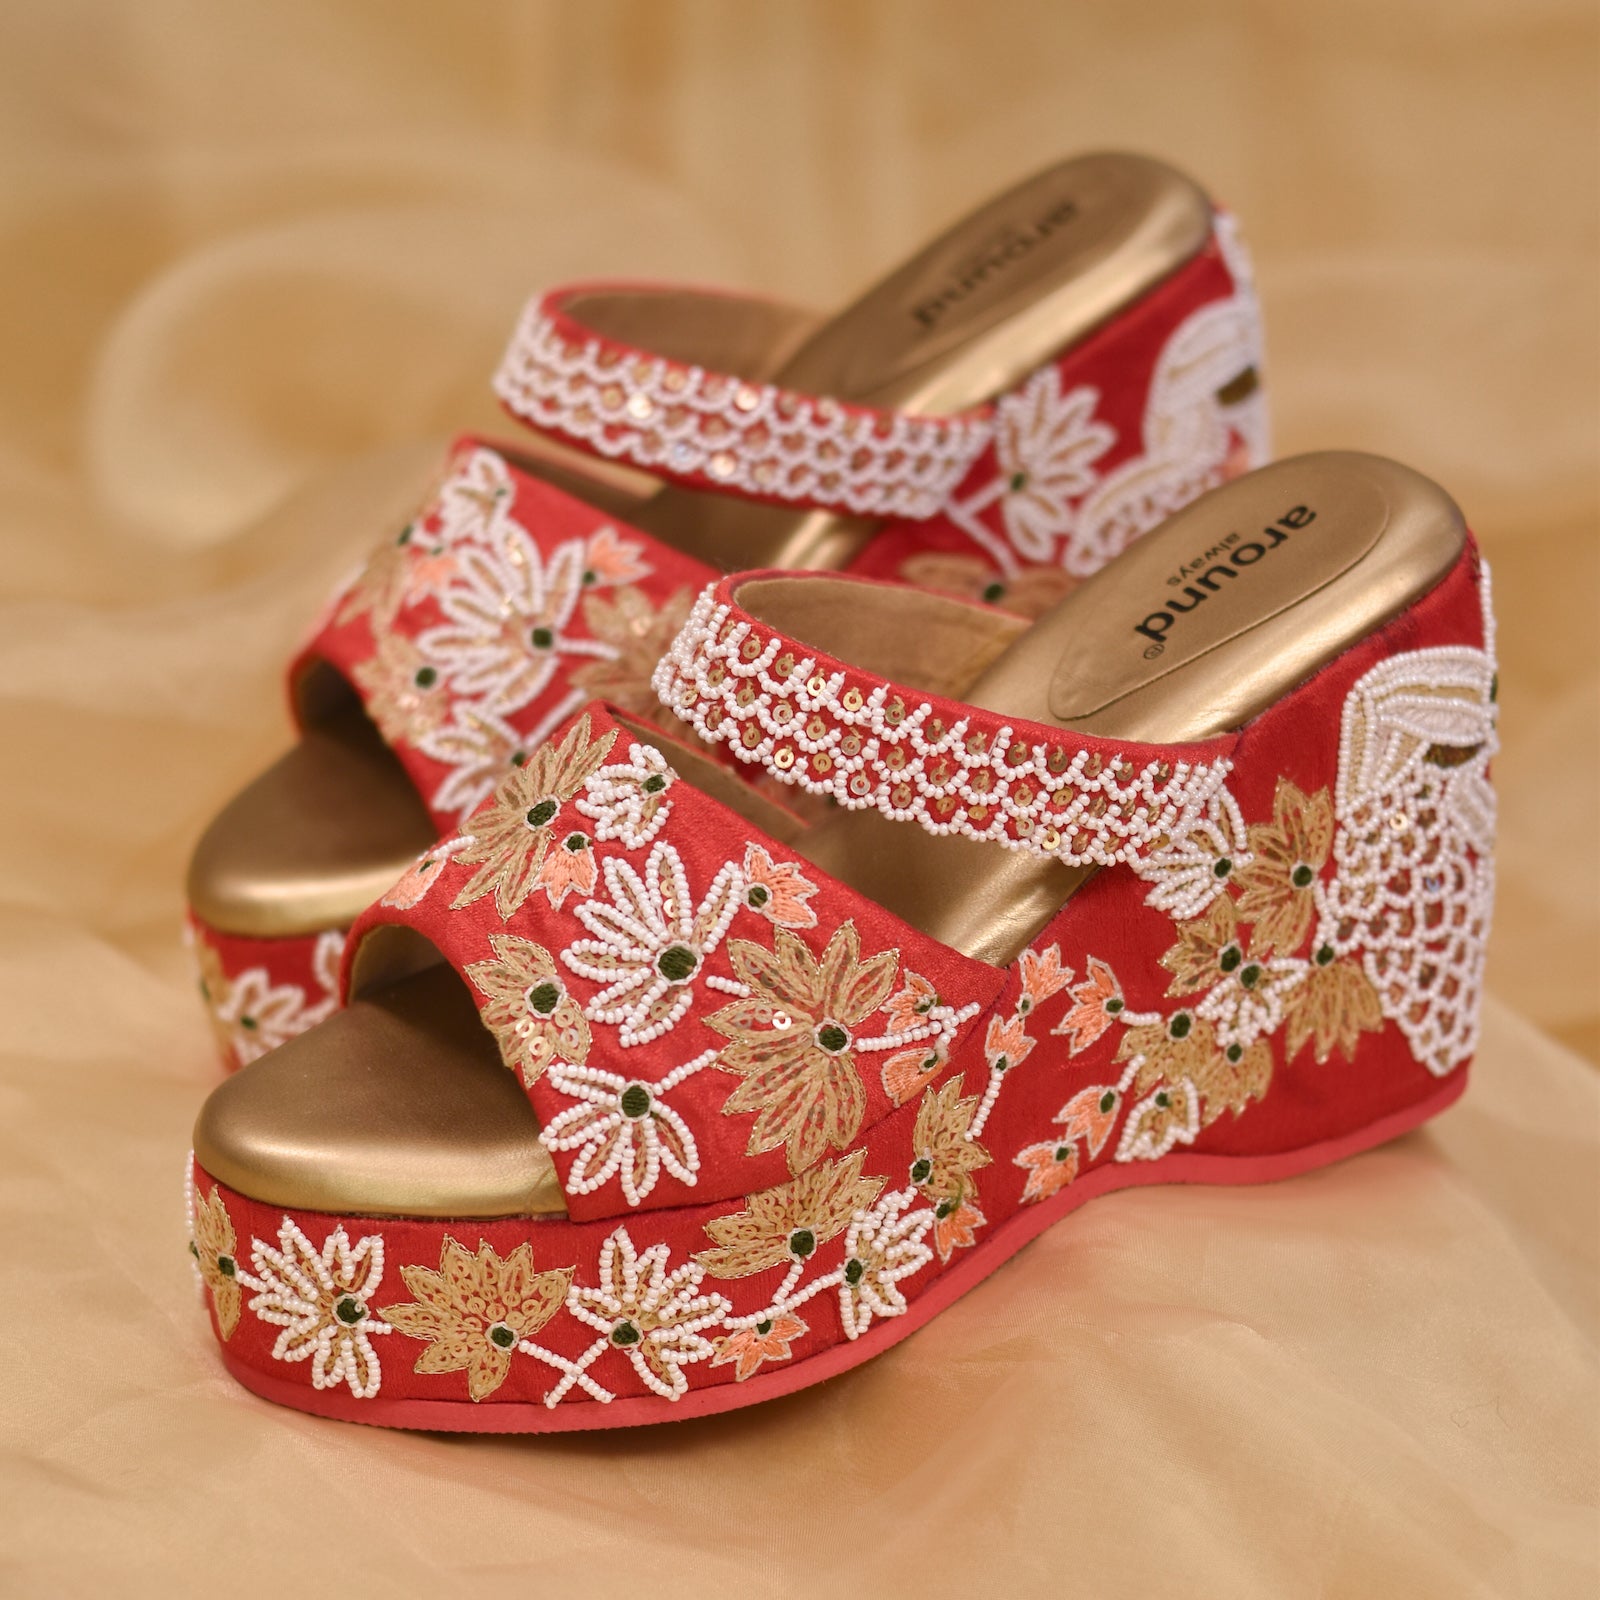 Fashion fancy sandals for girls womens| Alibaba.com